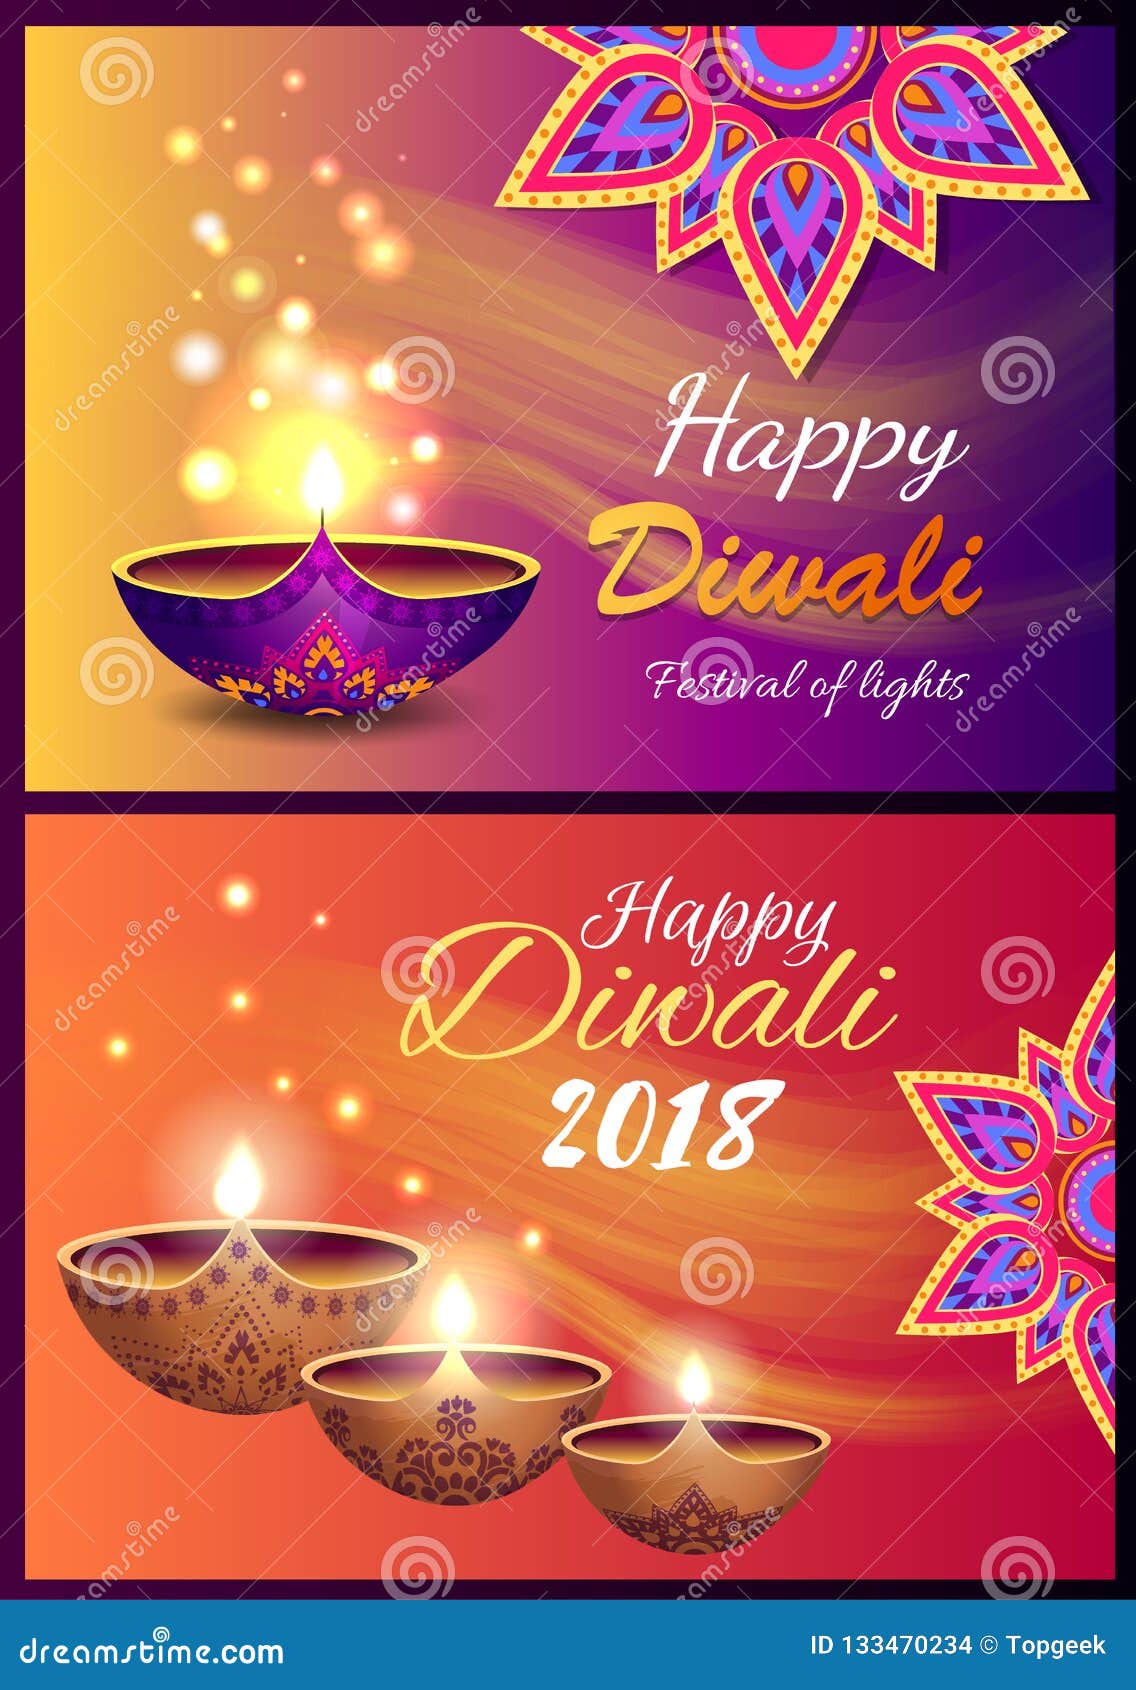 Happy Diwali 2018 Festival of Lights Poster Stock Vector ...